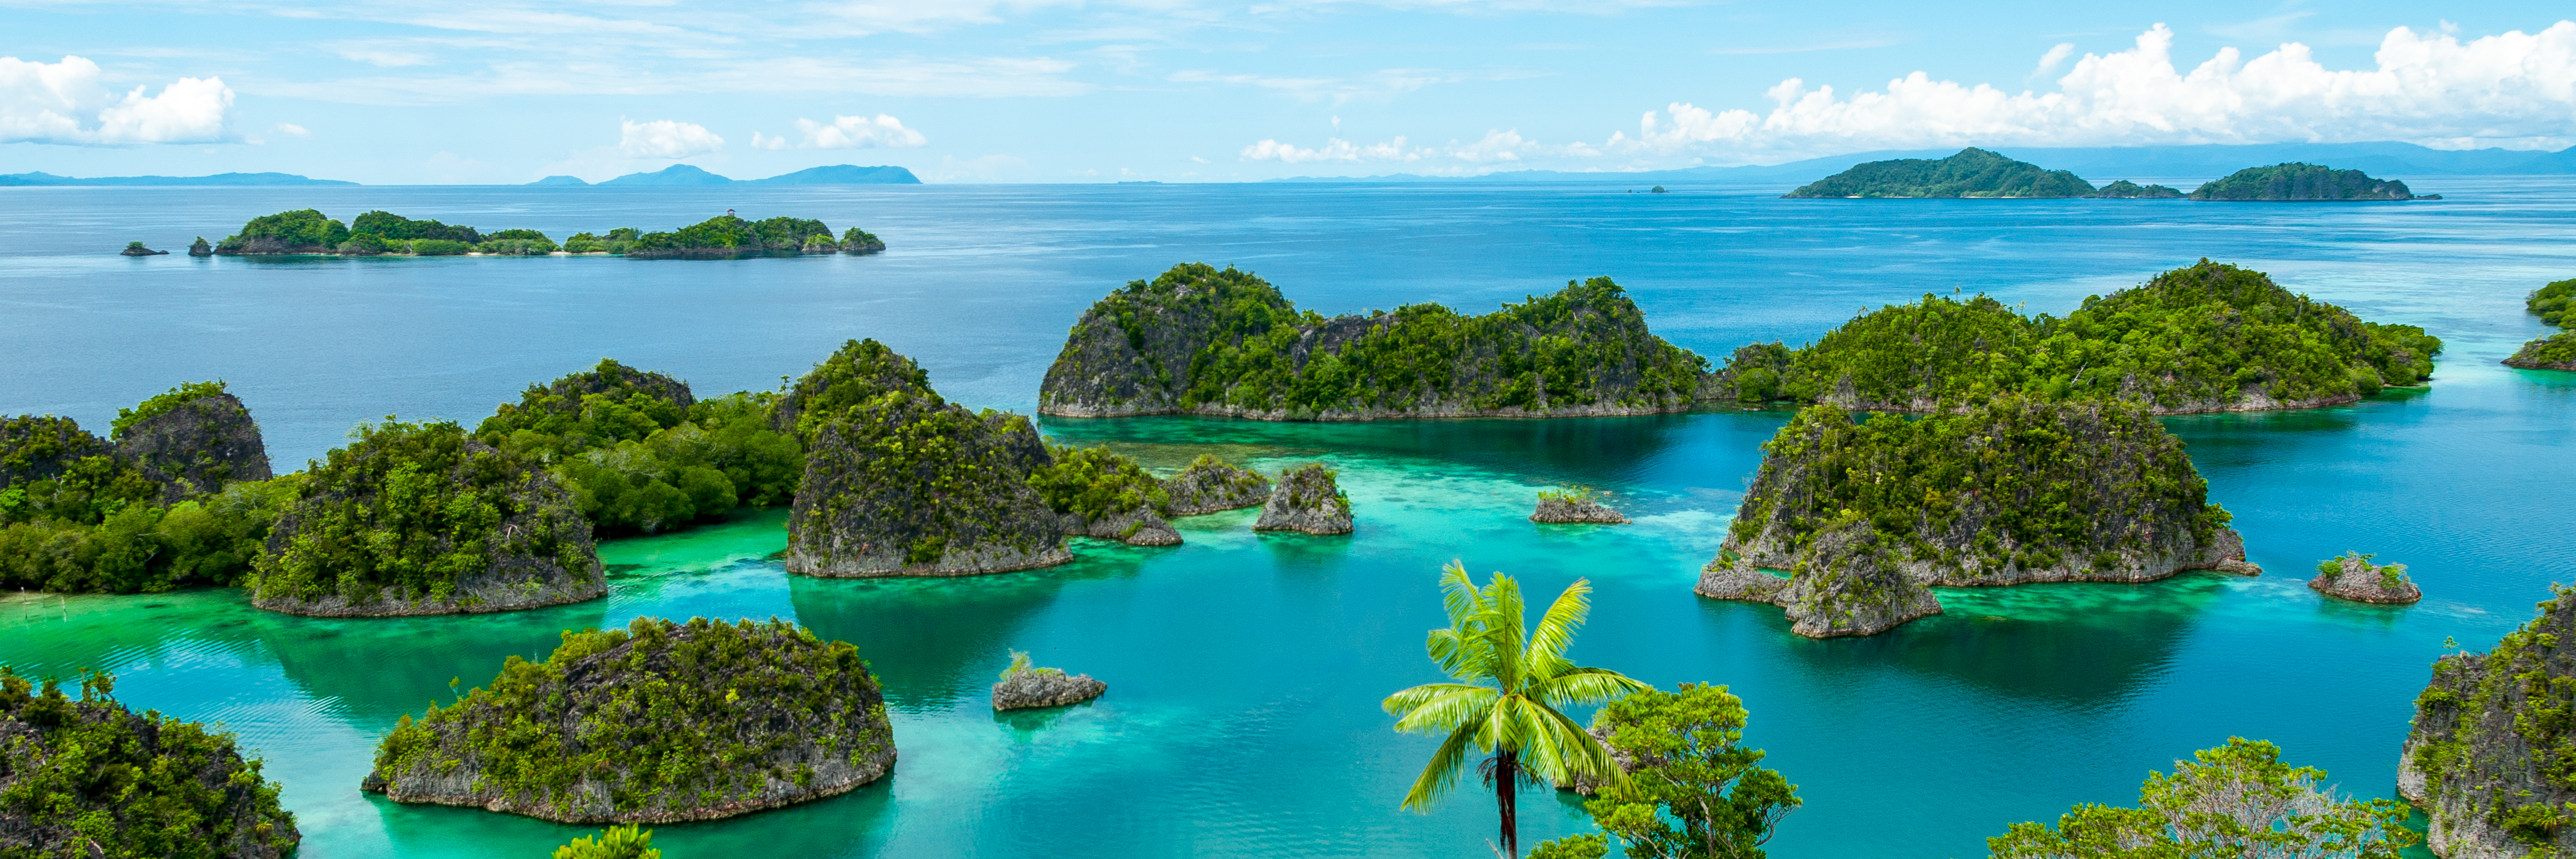 Consider a Cruise to a Remote Destination - Papua New Guinea